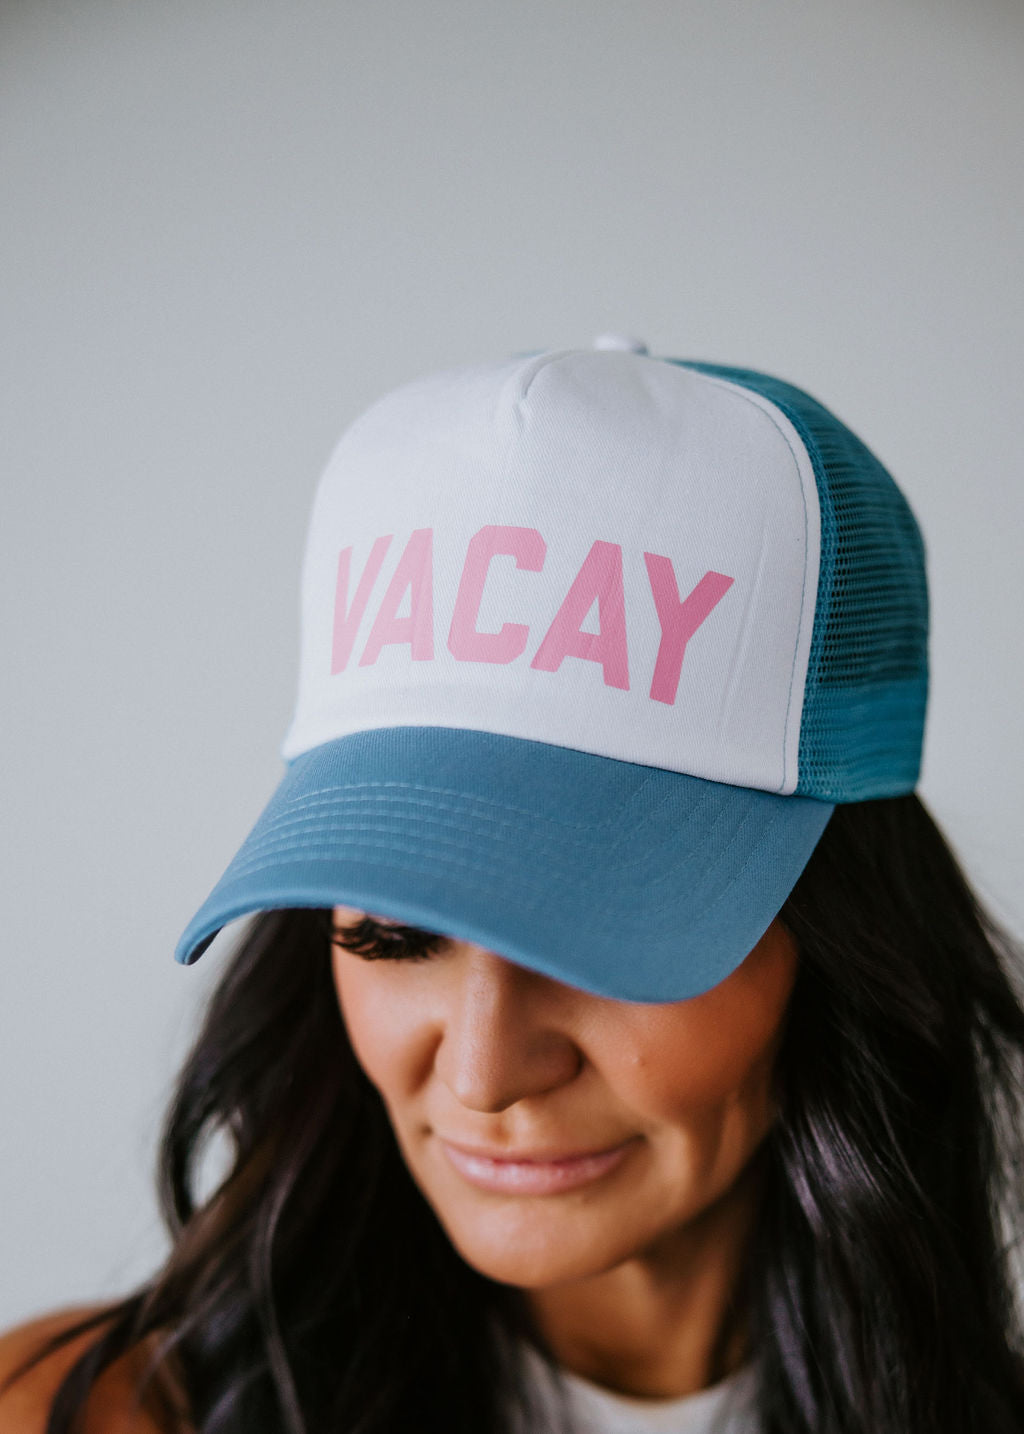 Vacation Trucker Hats